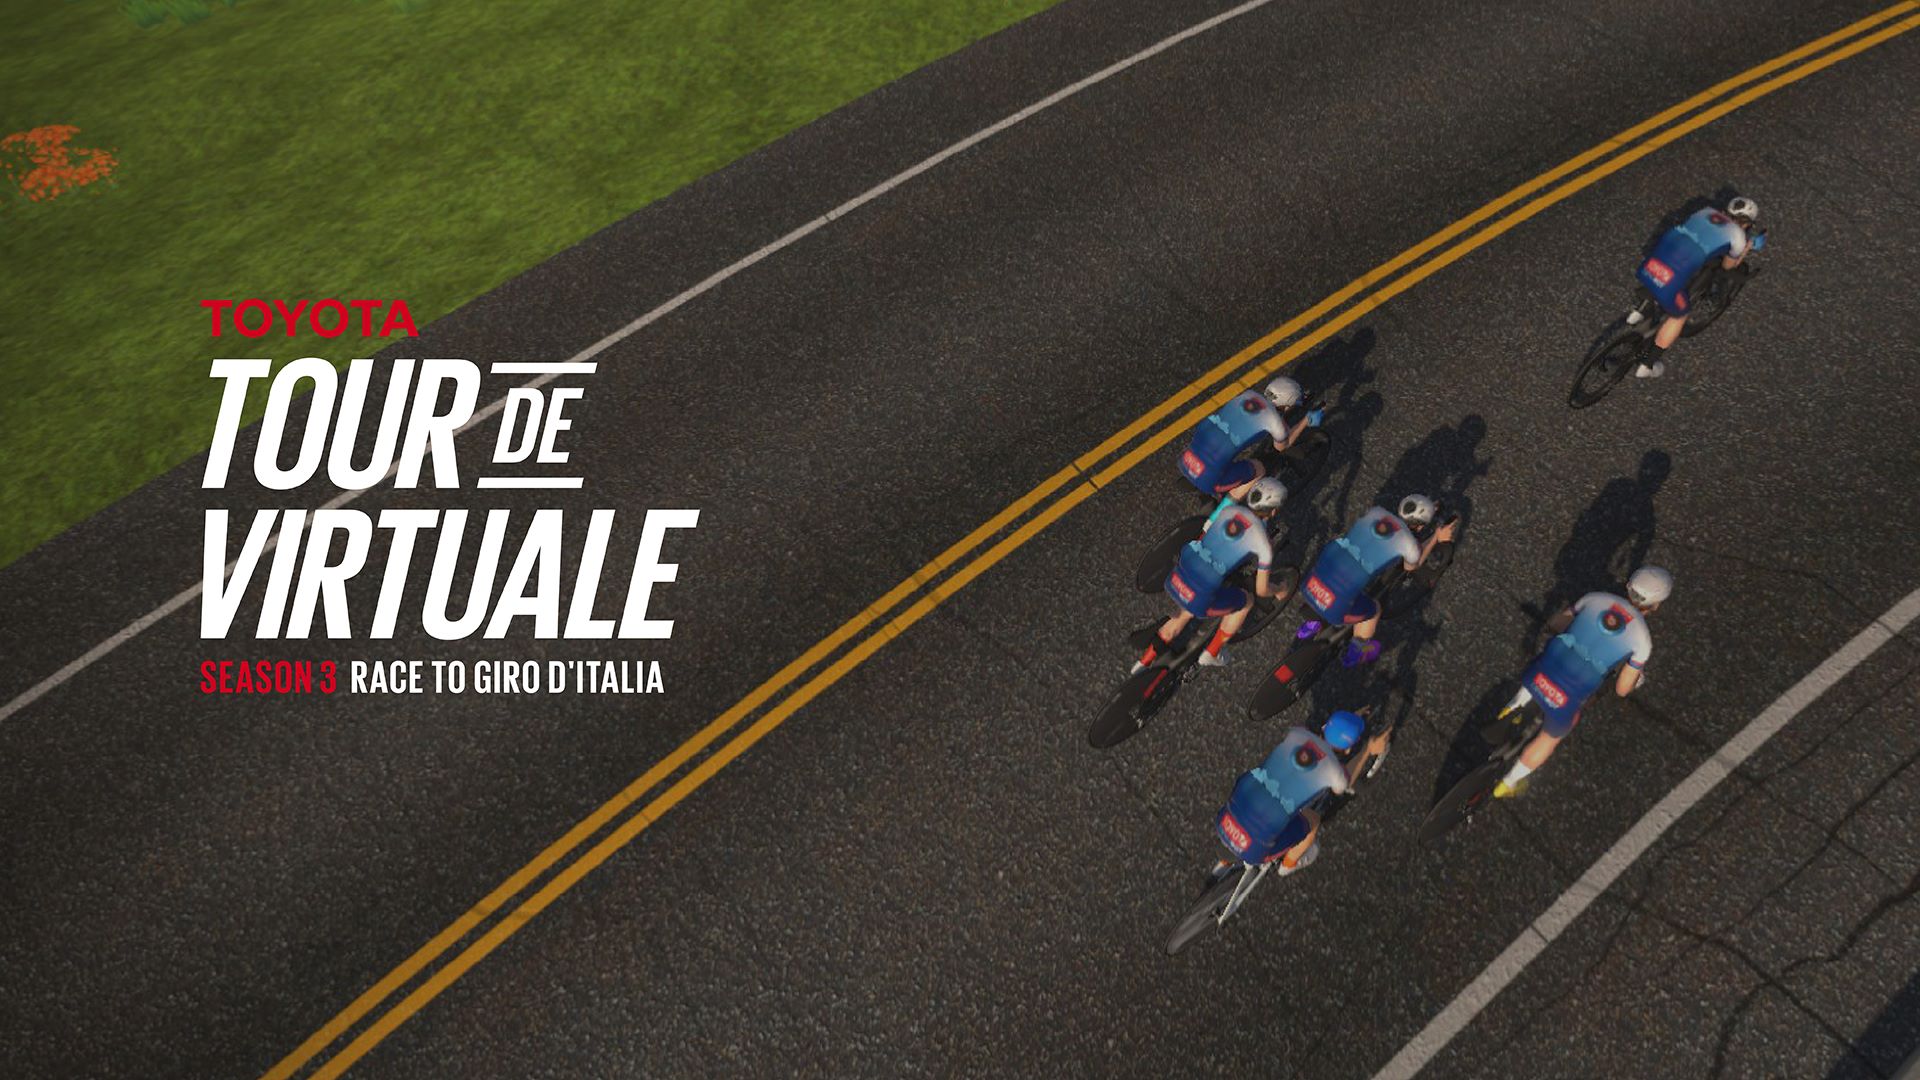 TOYOTA SOUTH AFRICA UNVEILS TOUR DE VIRTUALE SEASON 3: ENHANCED CYCLING EXPERIENCE WITH EXCLUSIVE GIRO D’ITALIA PRIZES